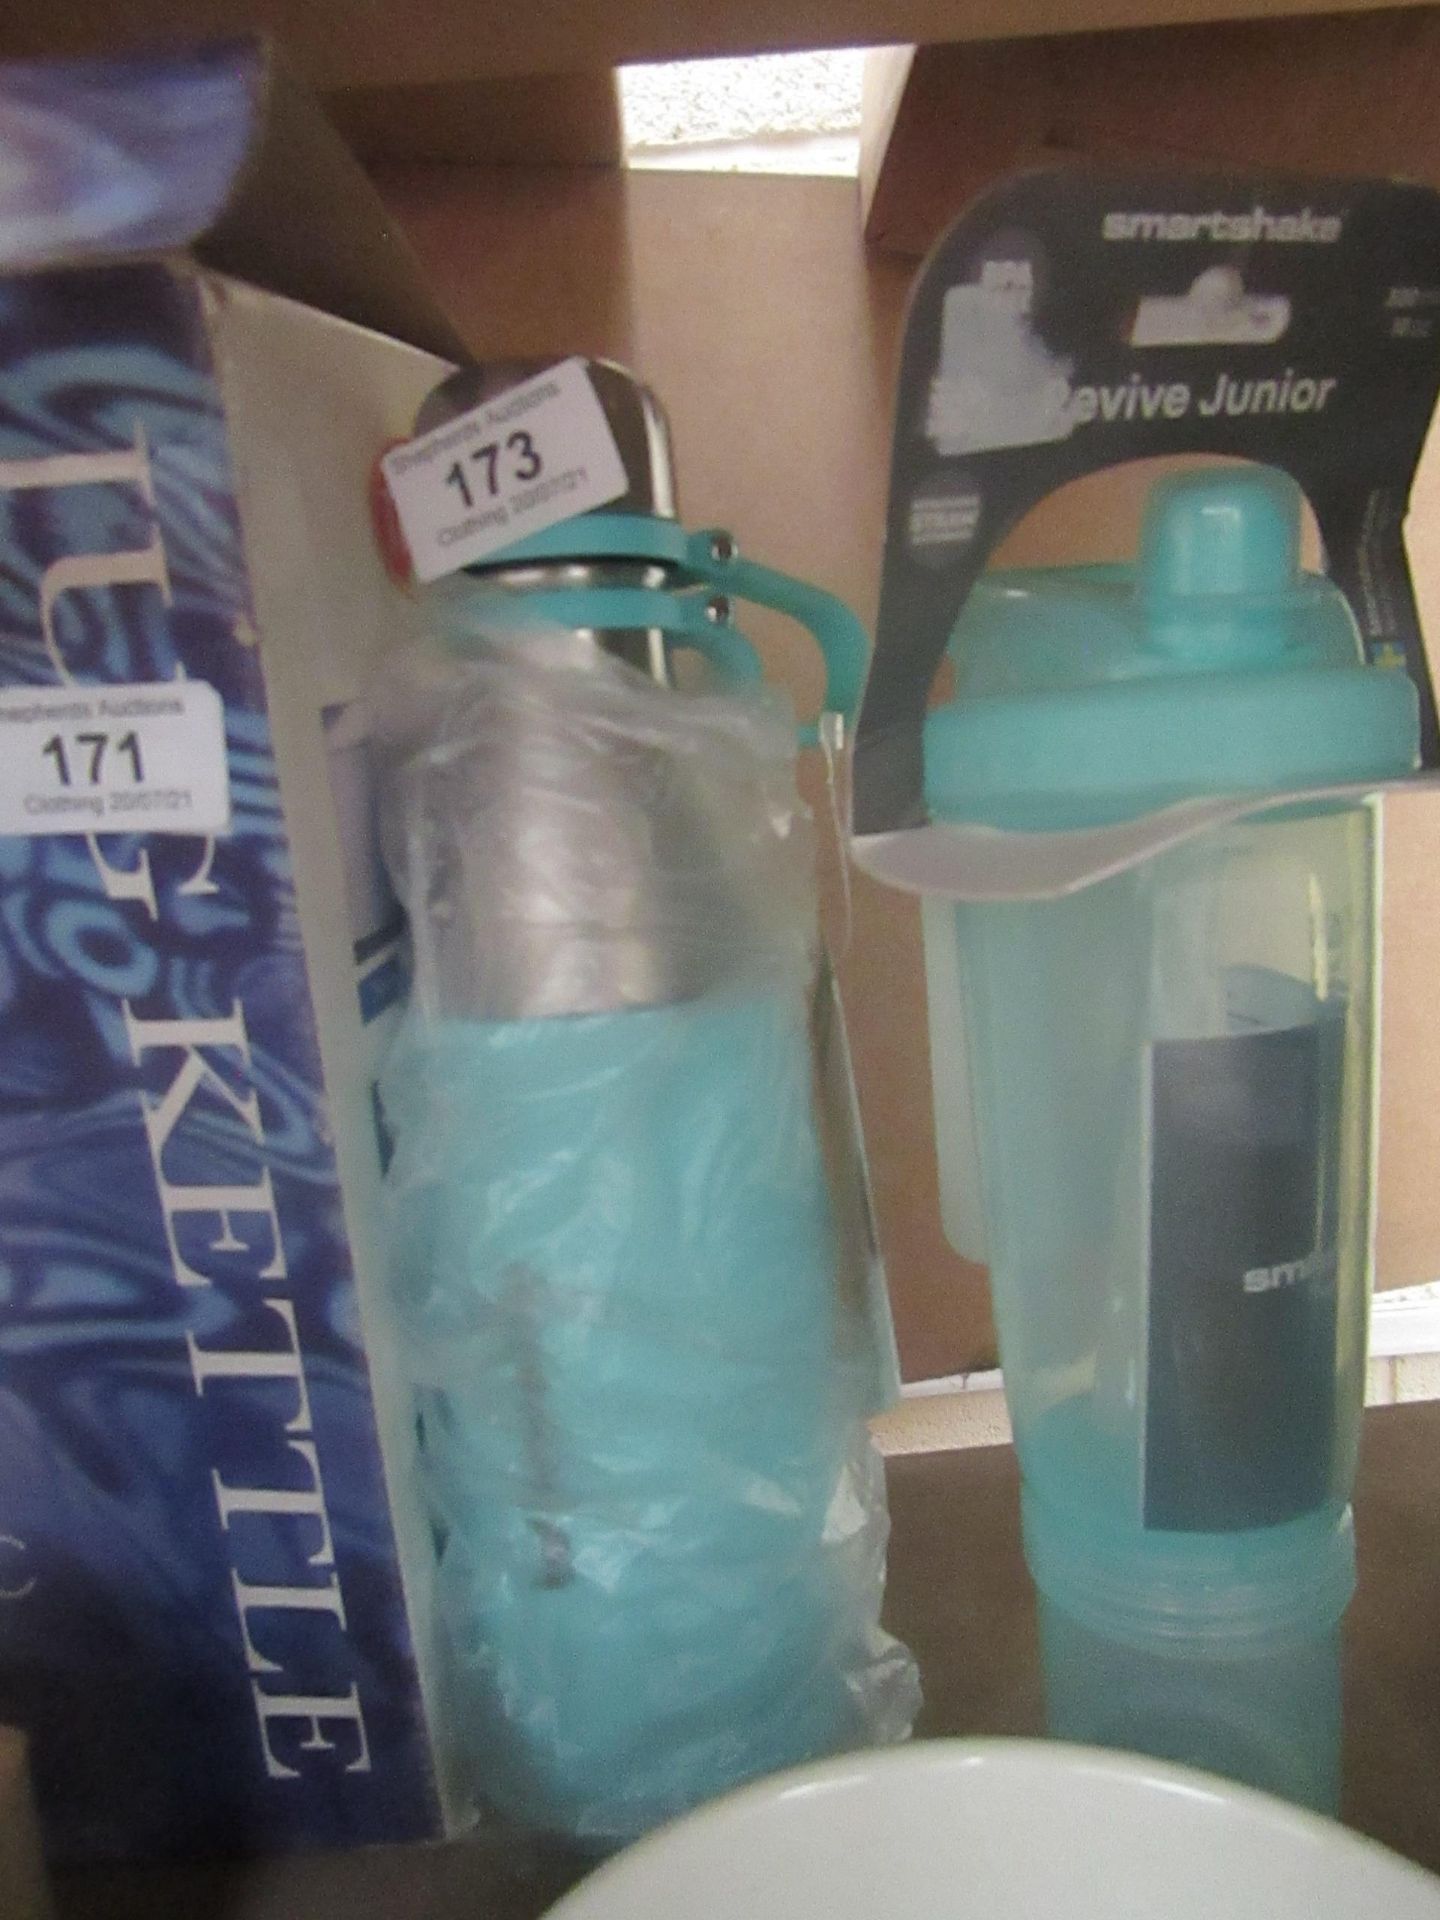 2 items being 1 x Smartshake - Revive Junior Bottle 30ml - Unused With Tags. 1x Herobility - Twist